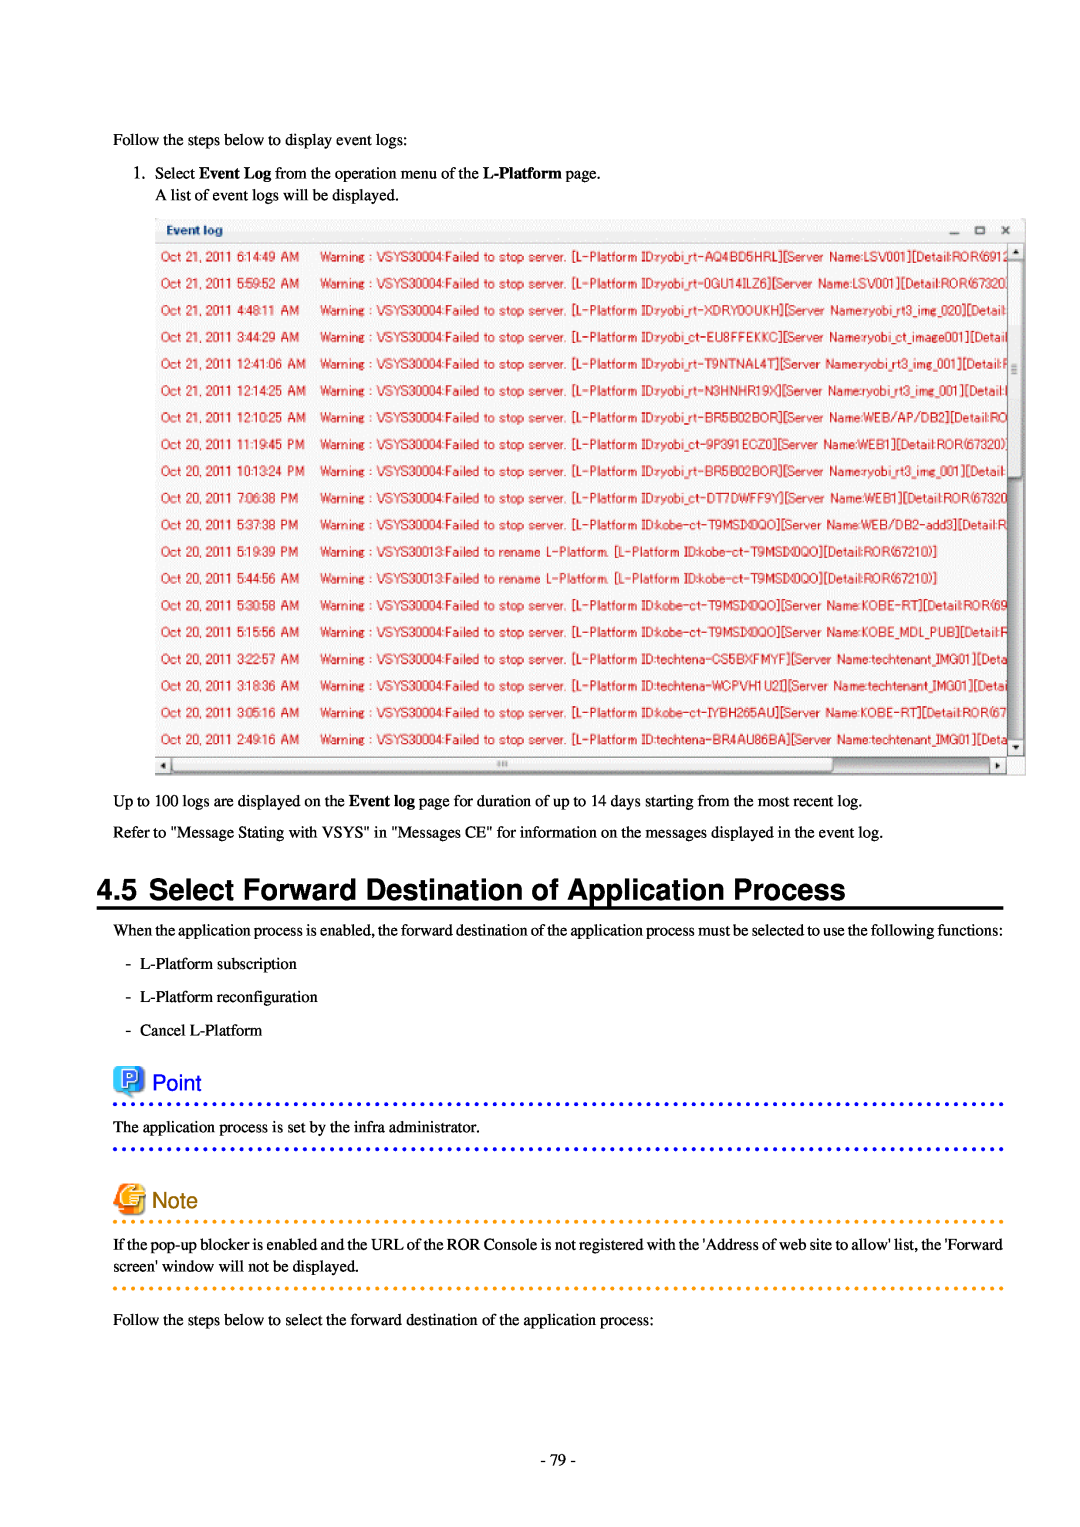 Fujitsu V3.0.0 manual Select Forward Destination of Application Process, Point 